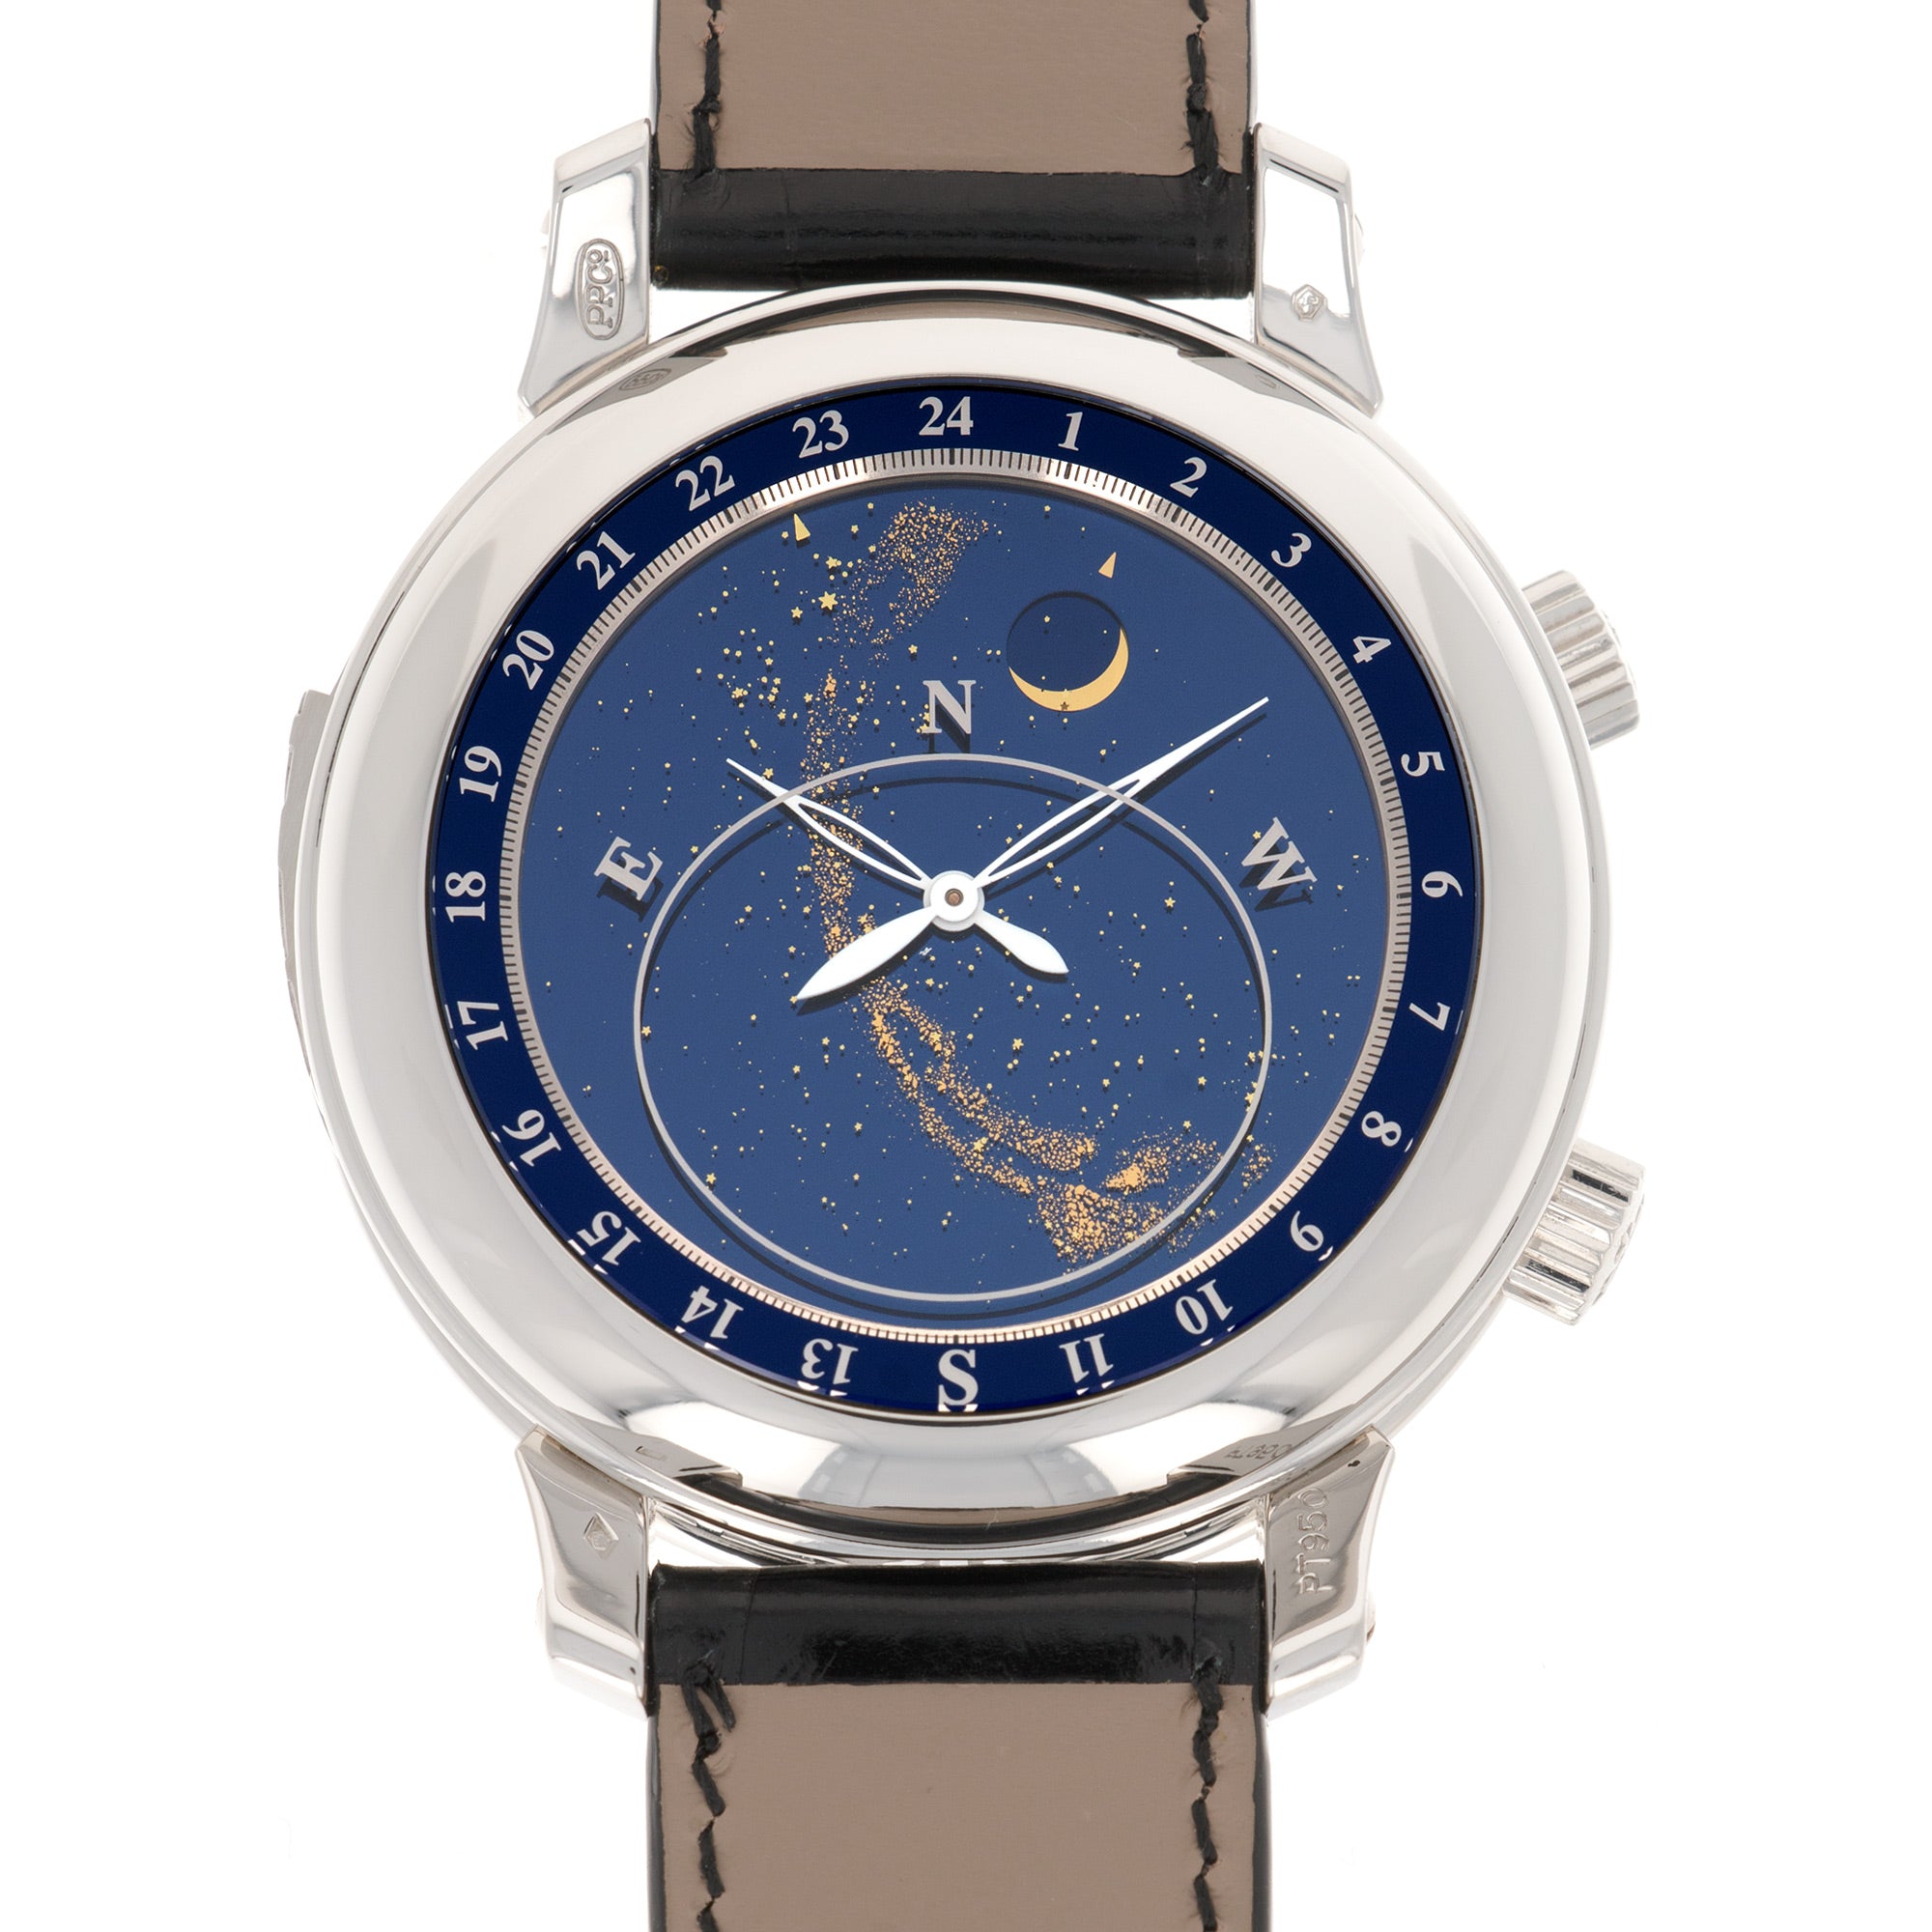 Patek Philippe - Patek Philippe Platinum Sky Moon Tourbillon Watch Ref. 5002 - The Keystone Watches